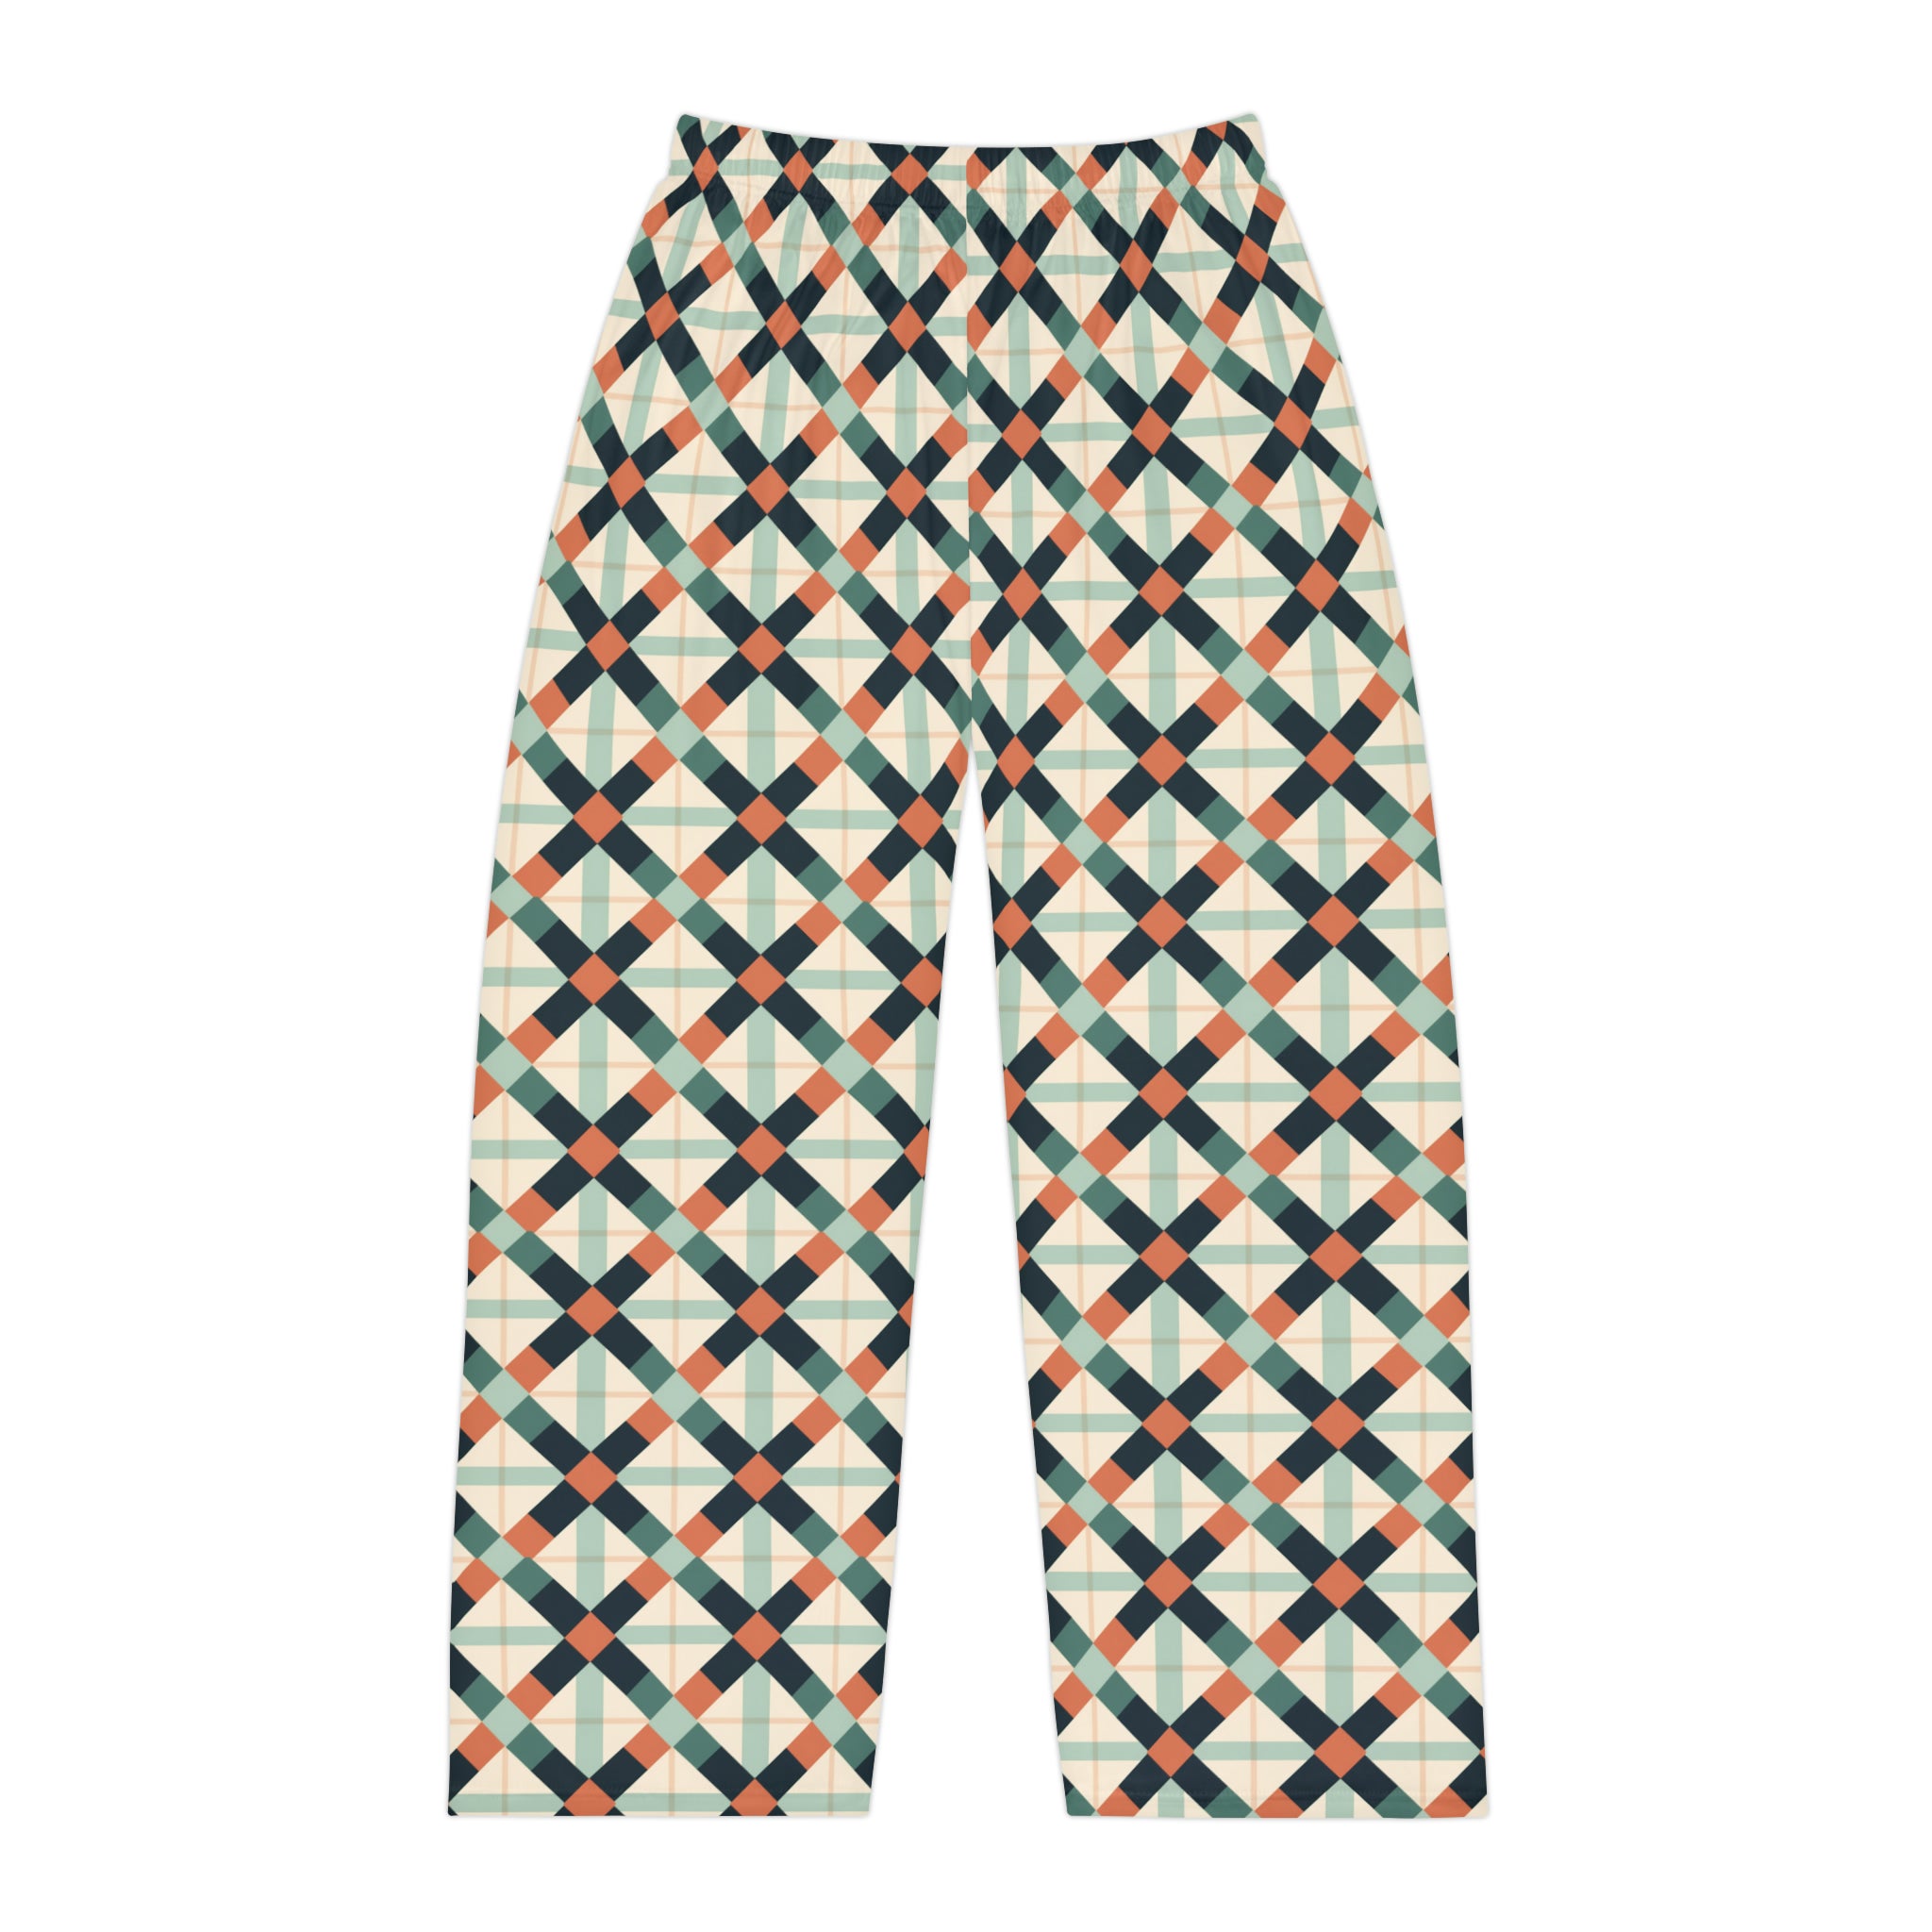 Men's Pajama Pants (AOP) - Seamless Checkered Designs 07